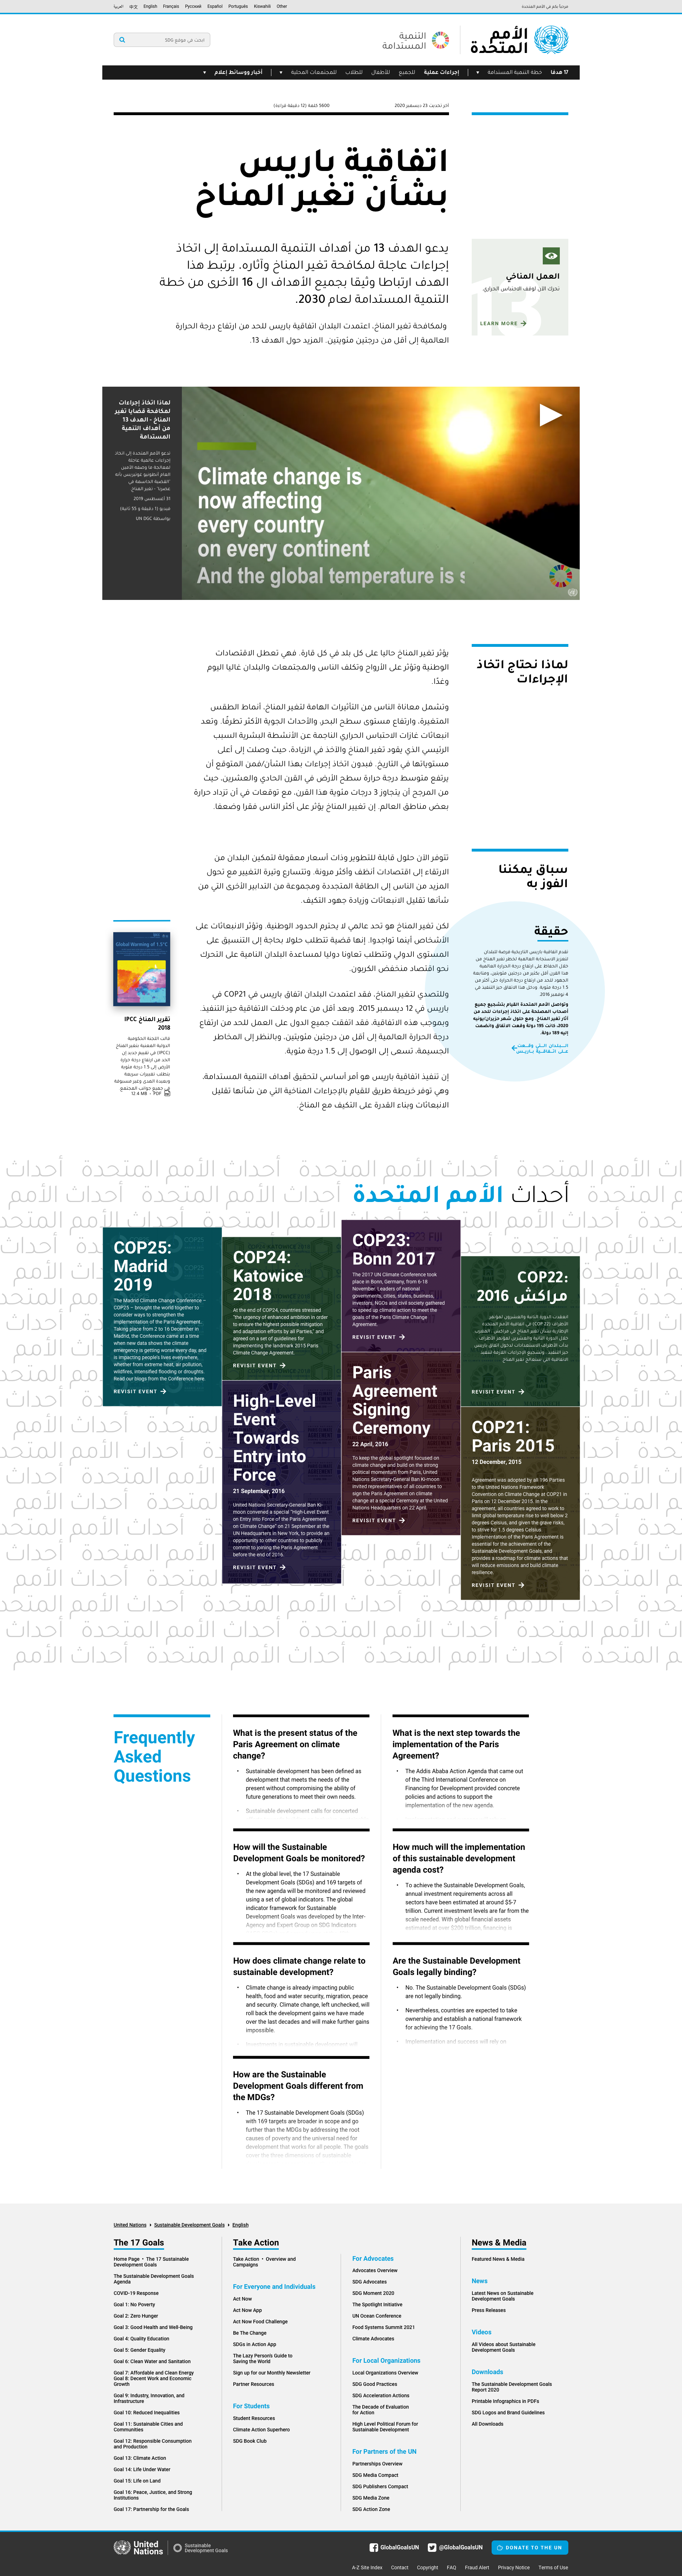 Paris Agreement layout in Arabic